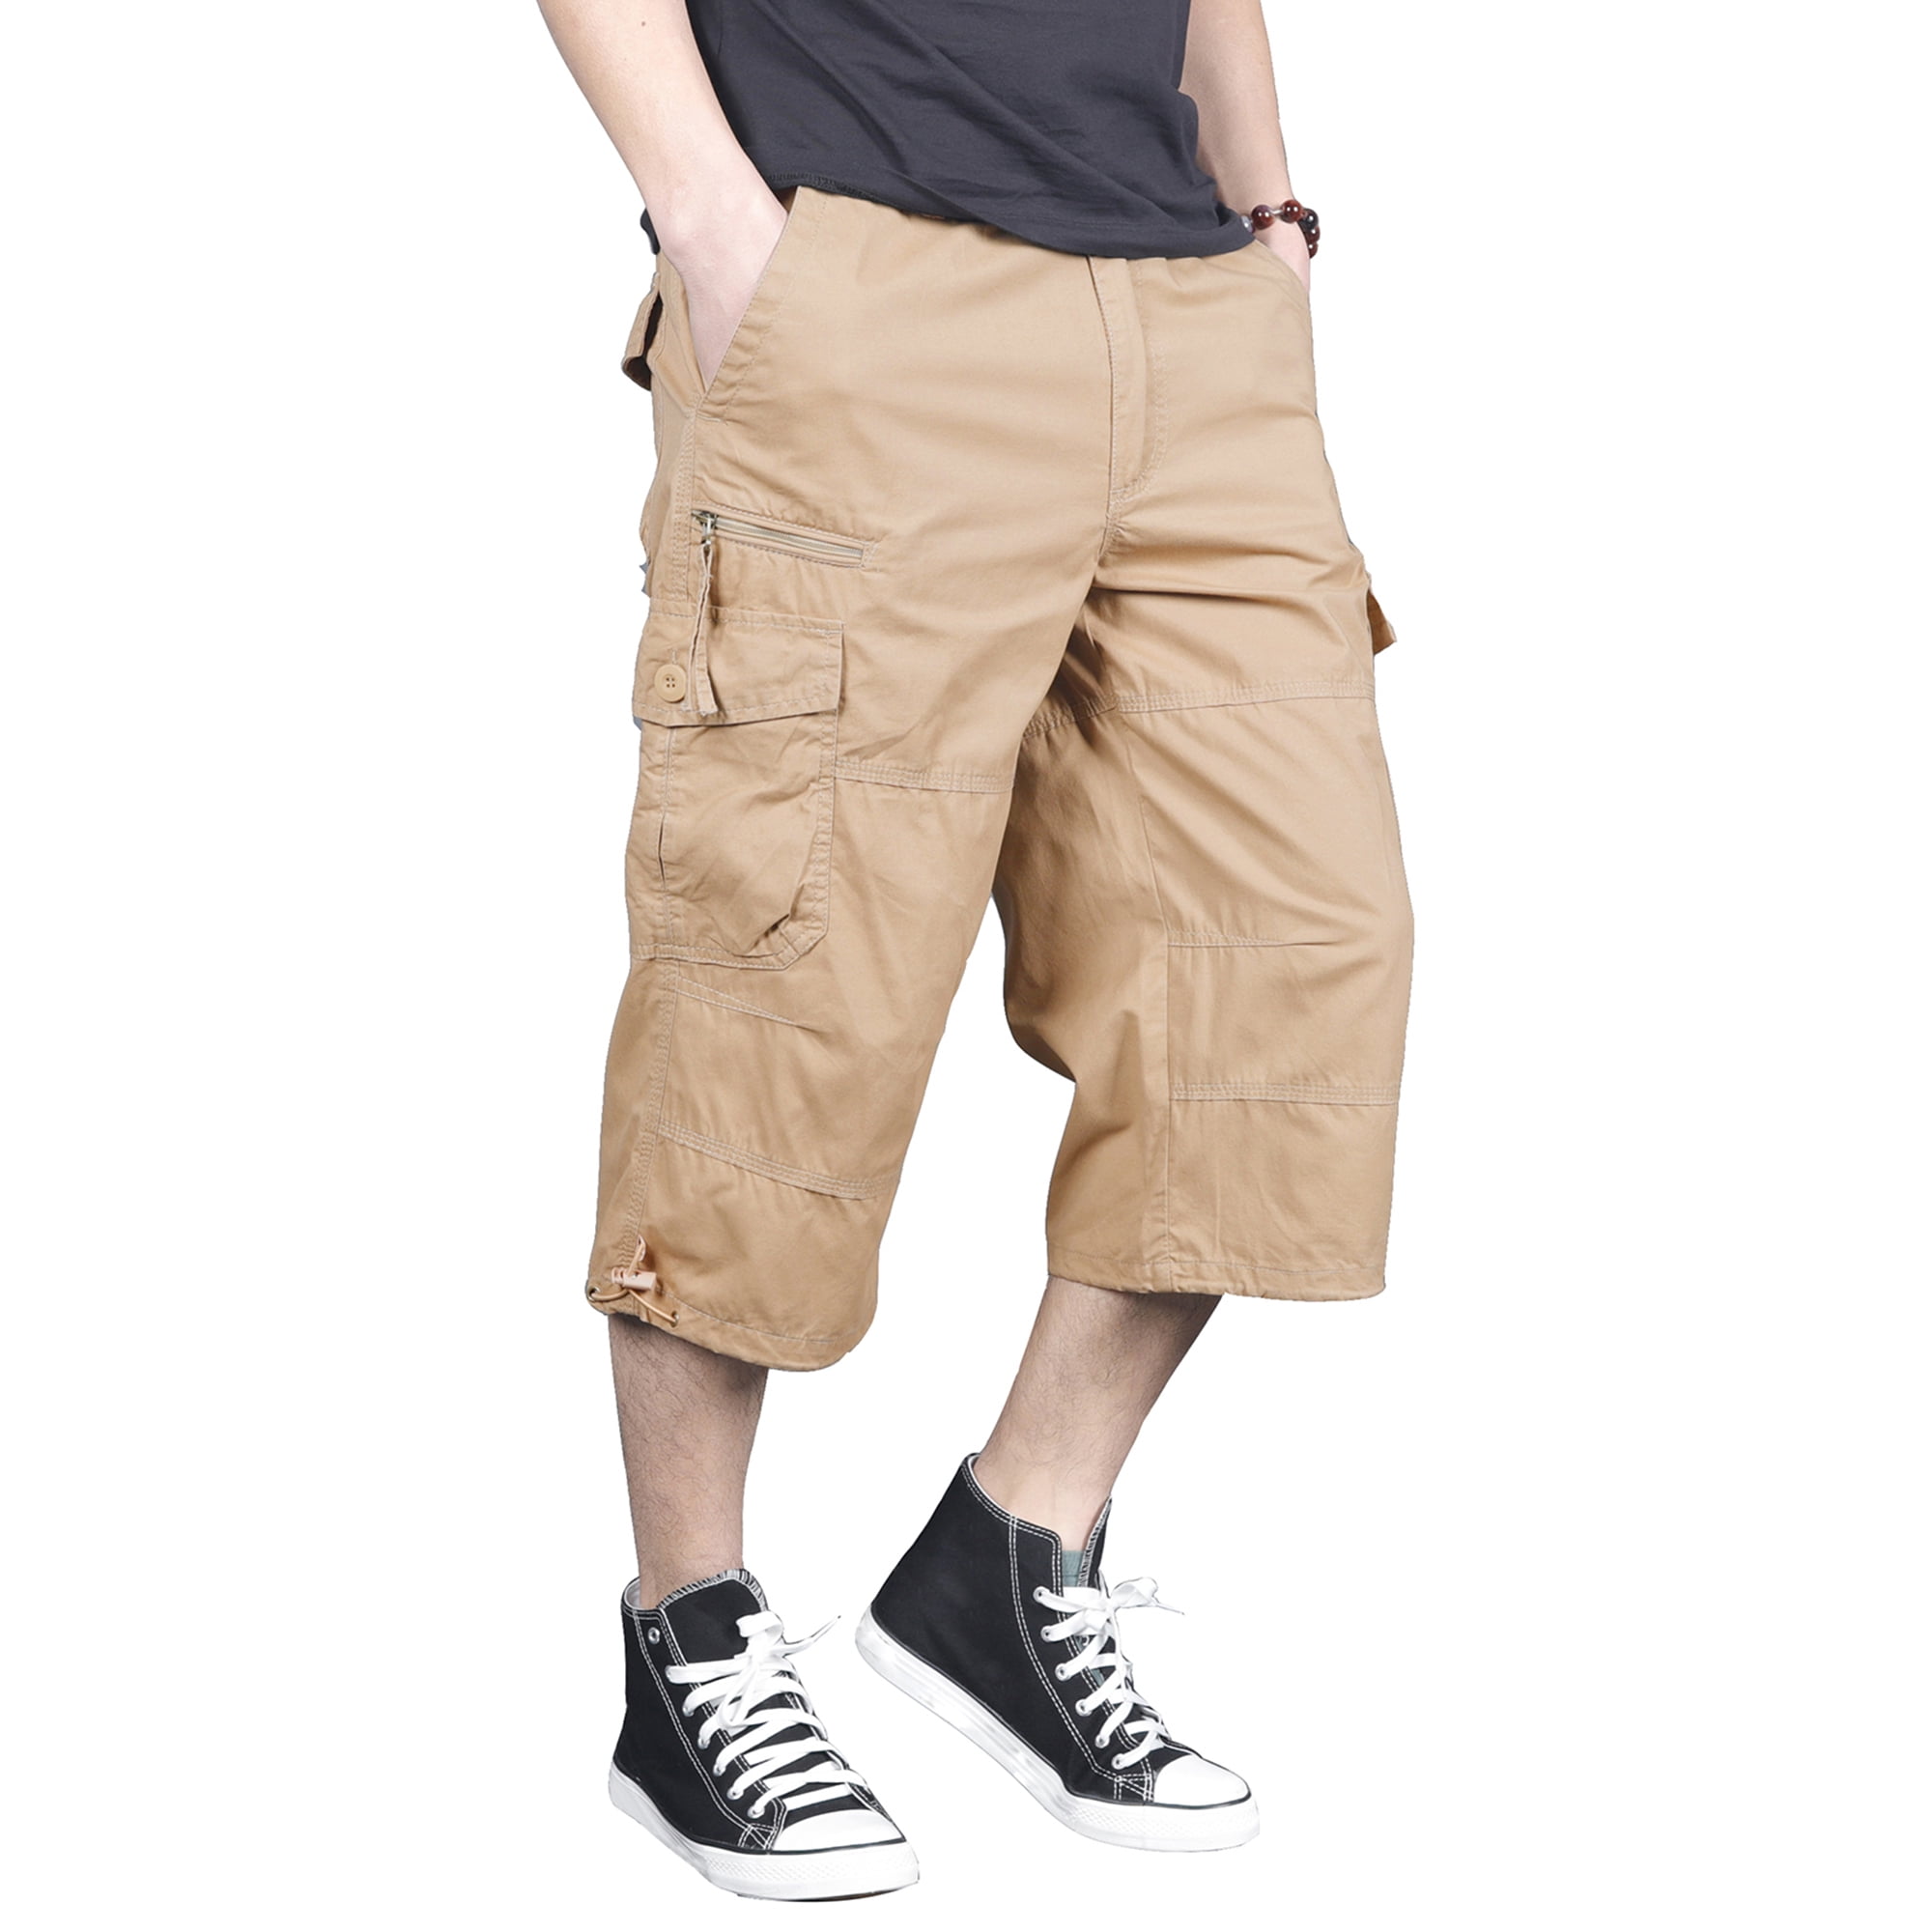 FEDTOSING Mens Casual Cargo Long Shorts Cotton Capri Pants Knee Length Shorts with Multi Pockets Elastic Waist 